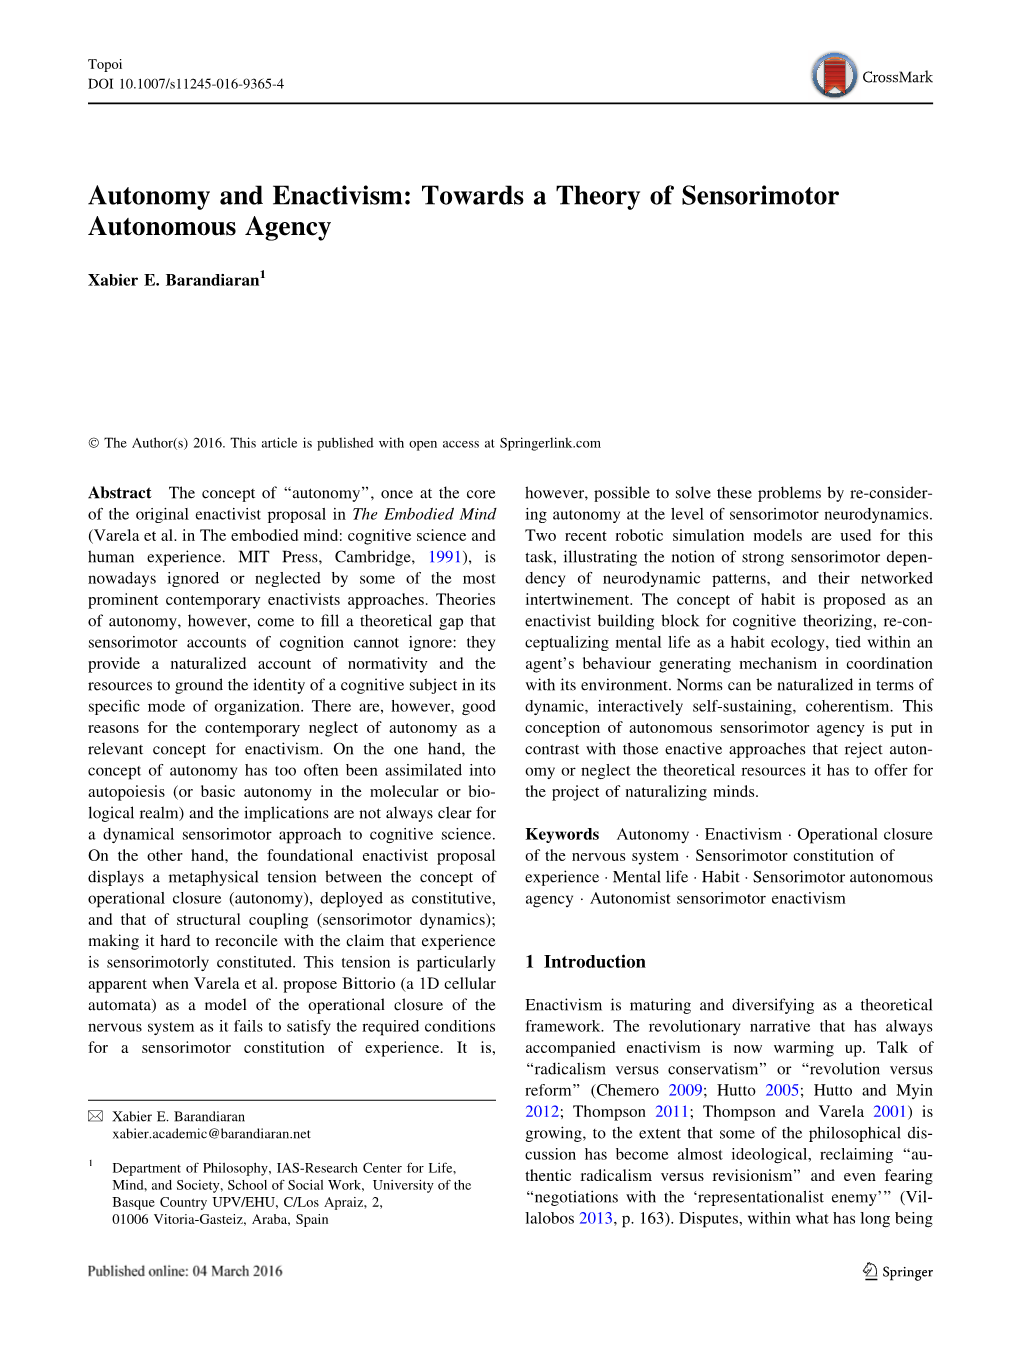 Autonomy and Enactivism: Towards a Theory of Sensorimotor Autonomous Agency